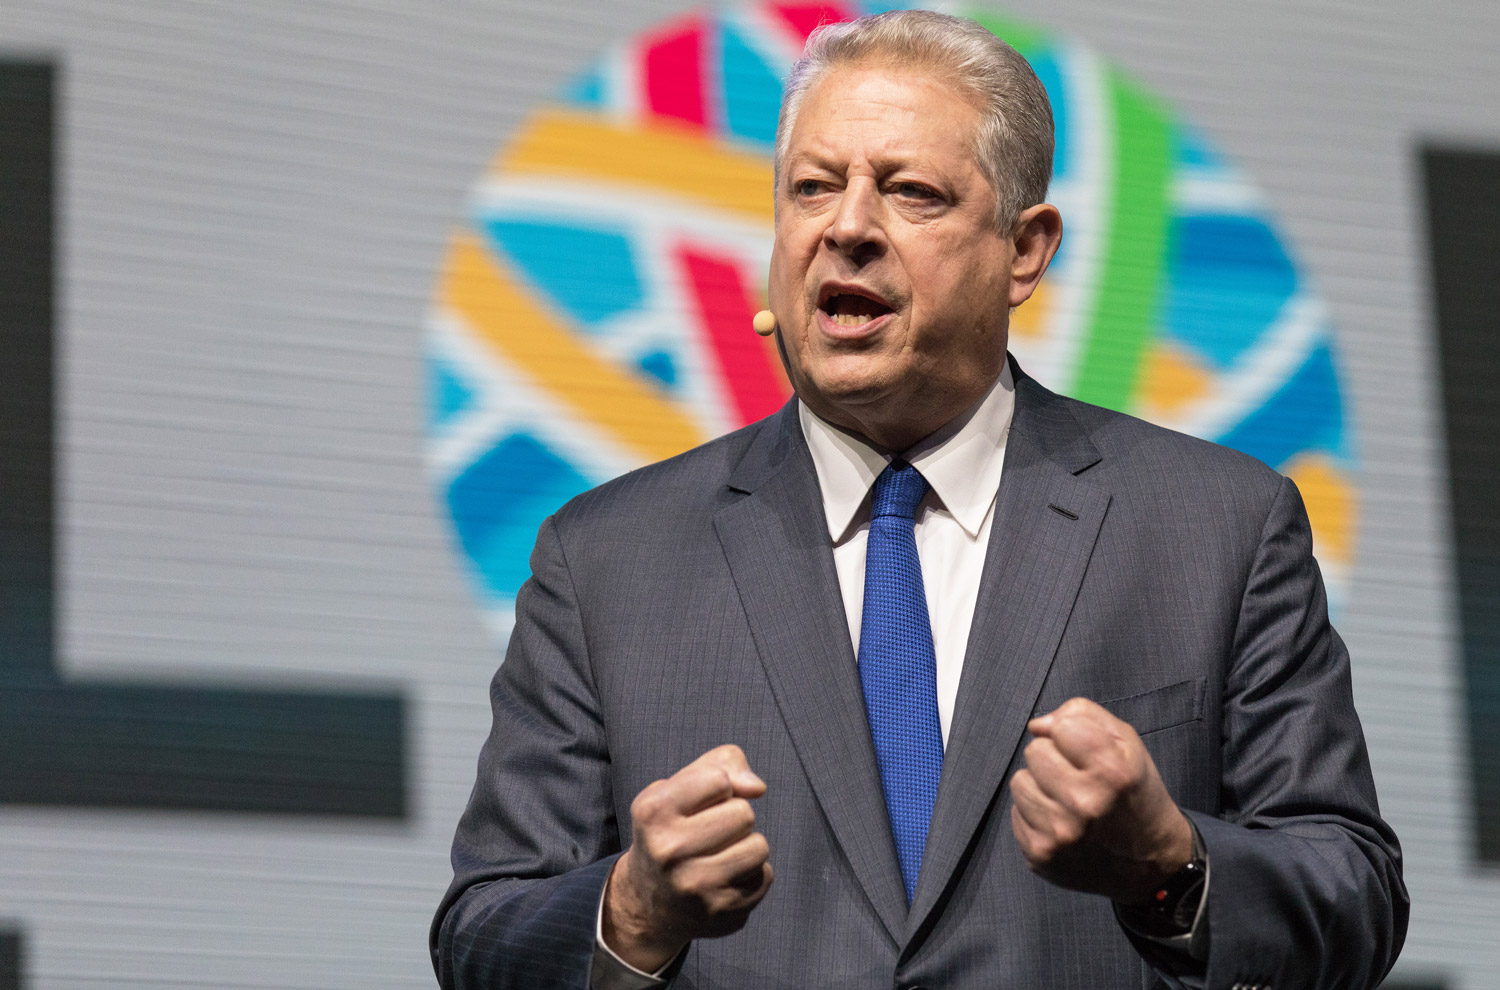 Al Gore at the San Francisco Moscone Convention Center